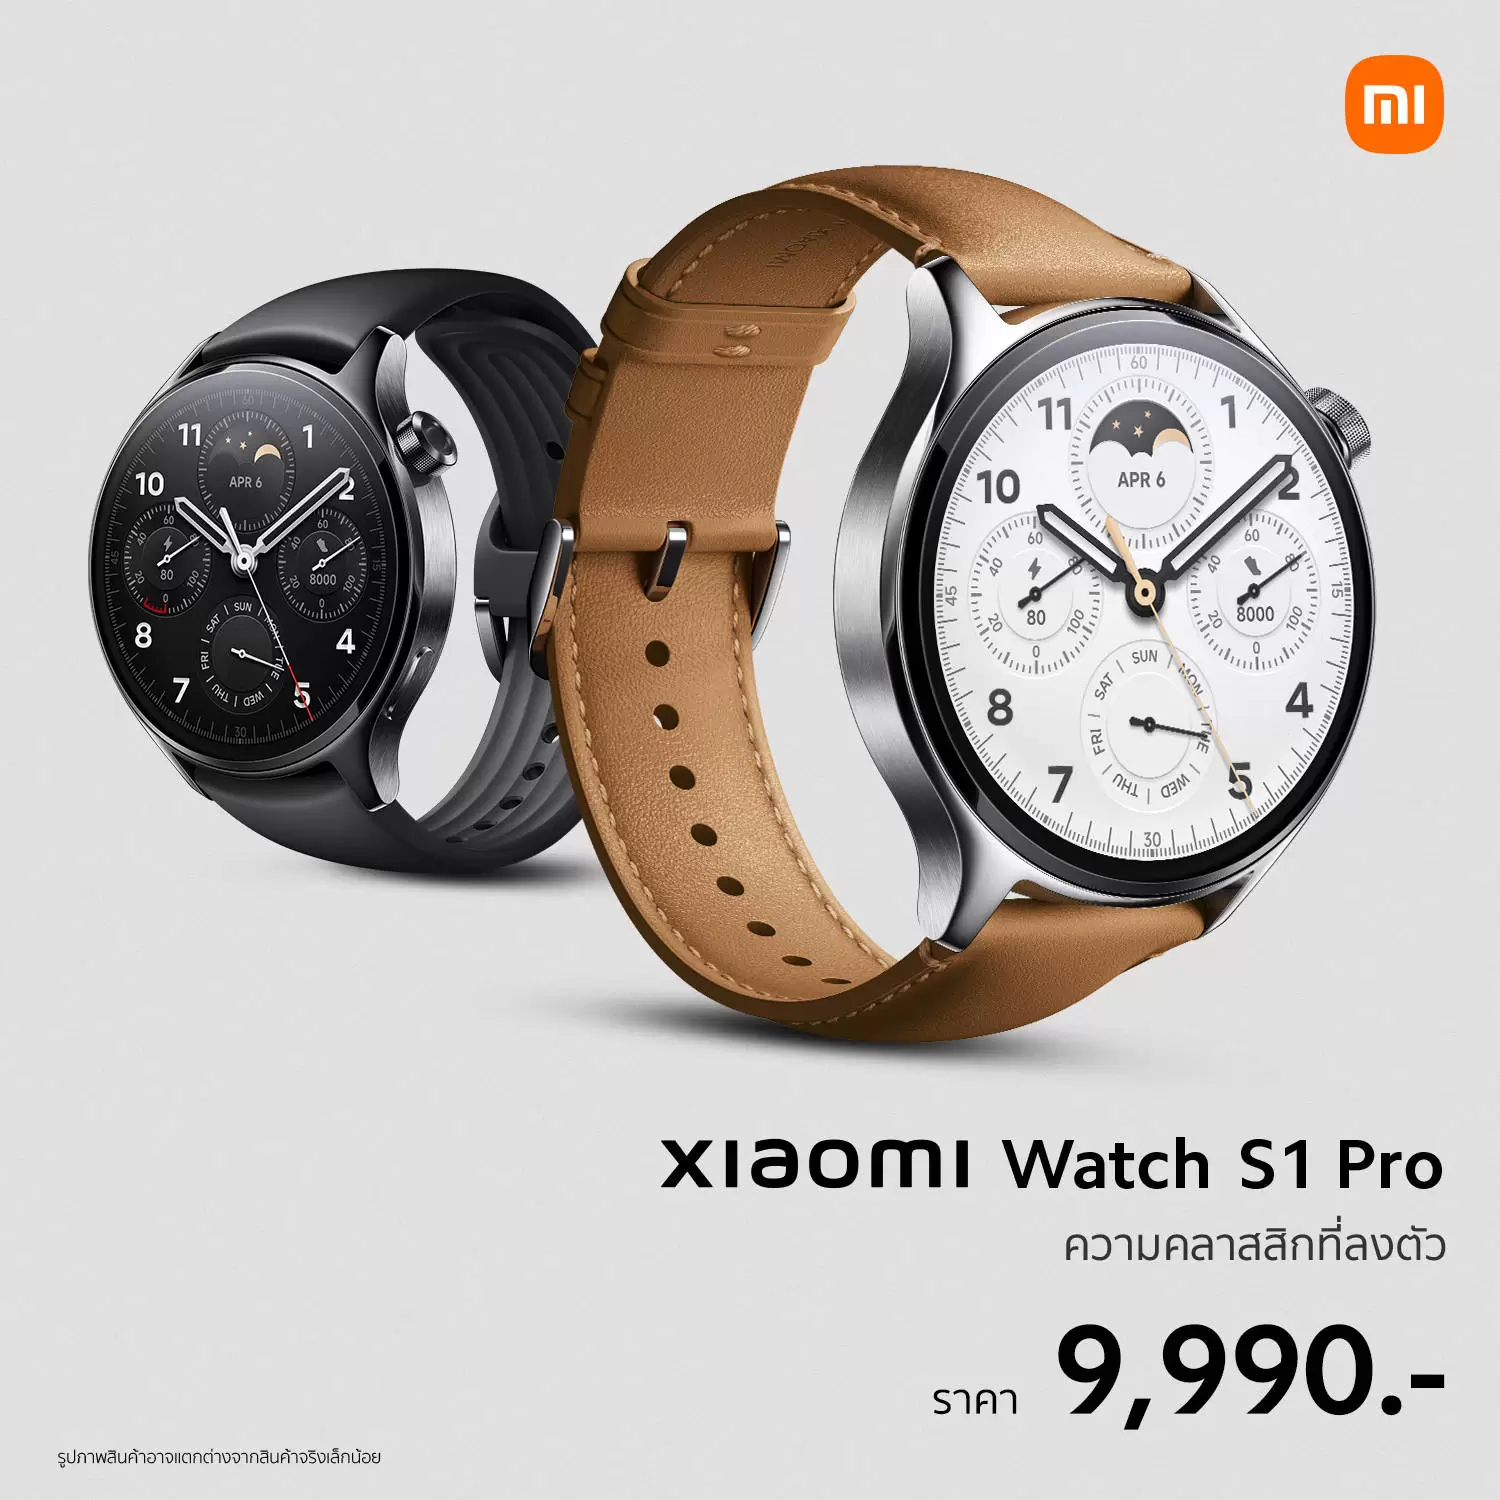 Xiaomi Watch S1 Pro KV | Xiaomi | รวมข้อมูล AIoT รุ่นใหม่ของ Xiaomi นาฬิกา, หูฟัง และ หุ่นยนต์ดูดฝุ่น ราคาและโปรโมชั่น